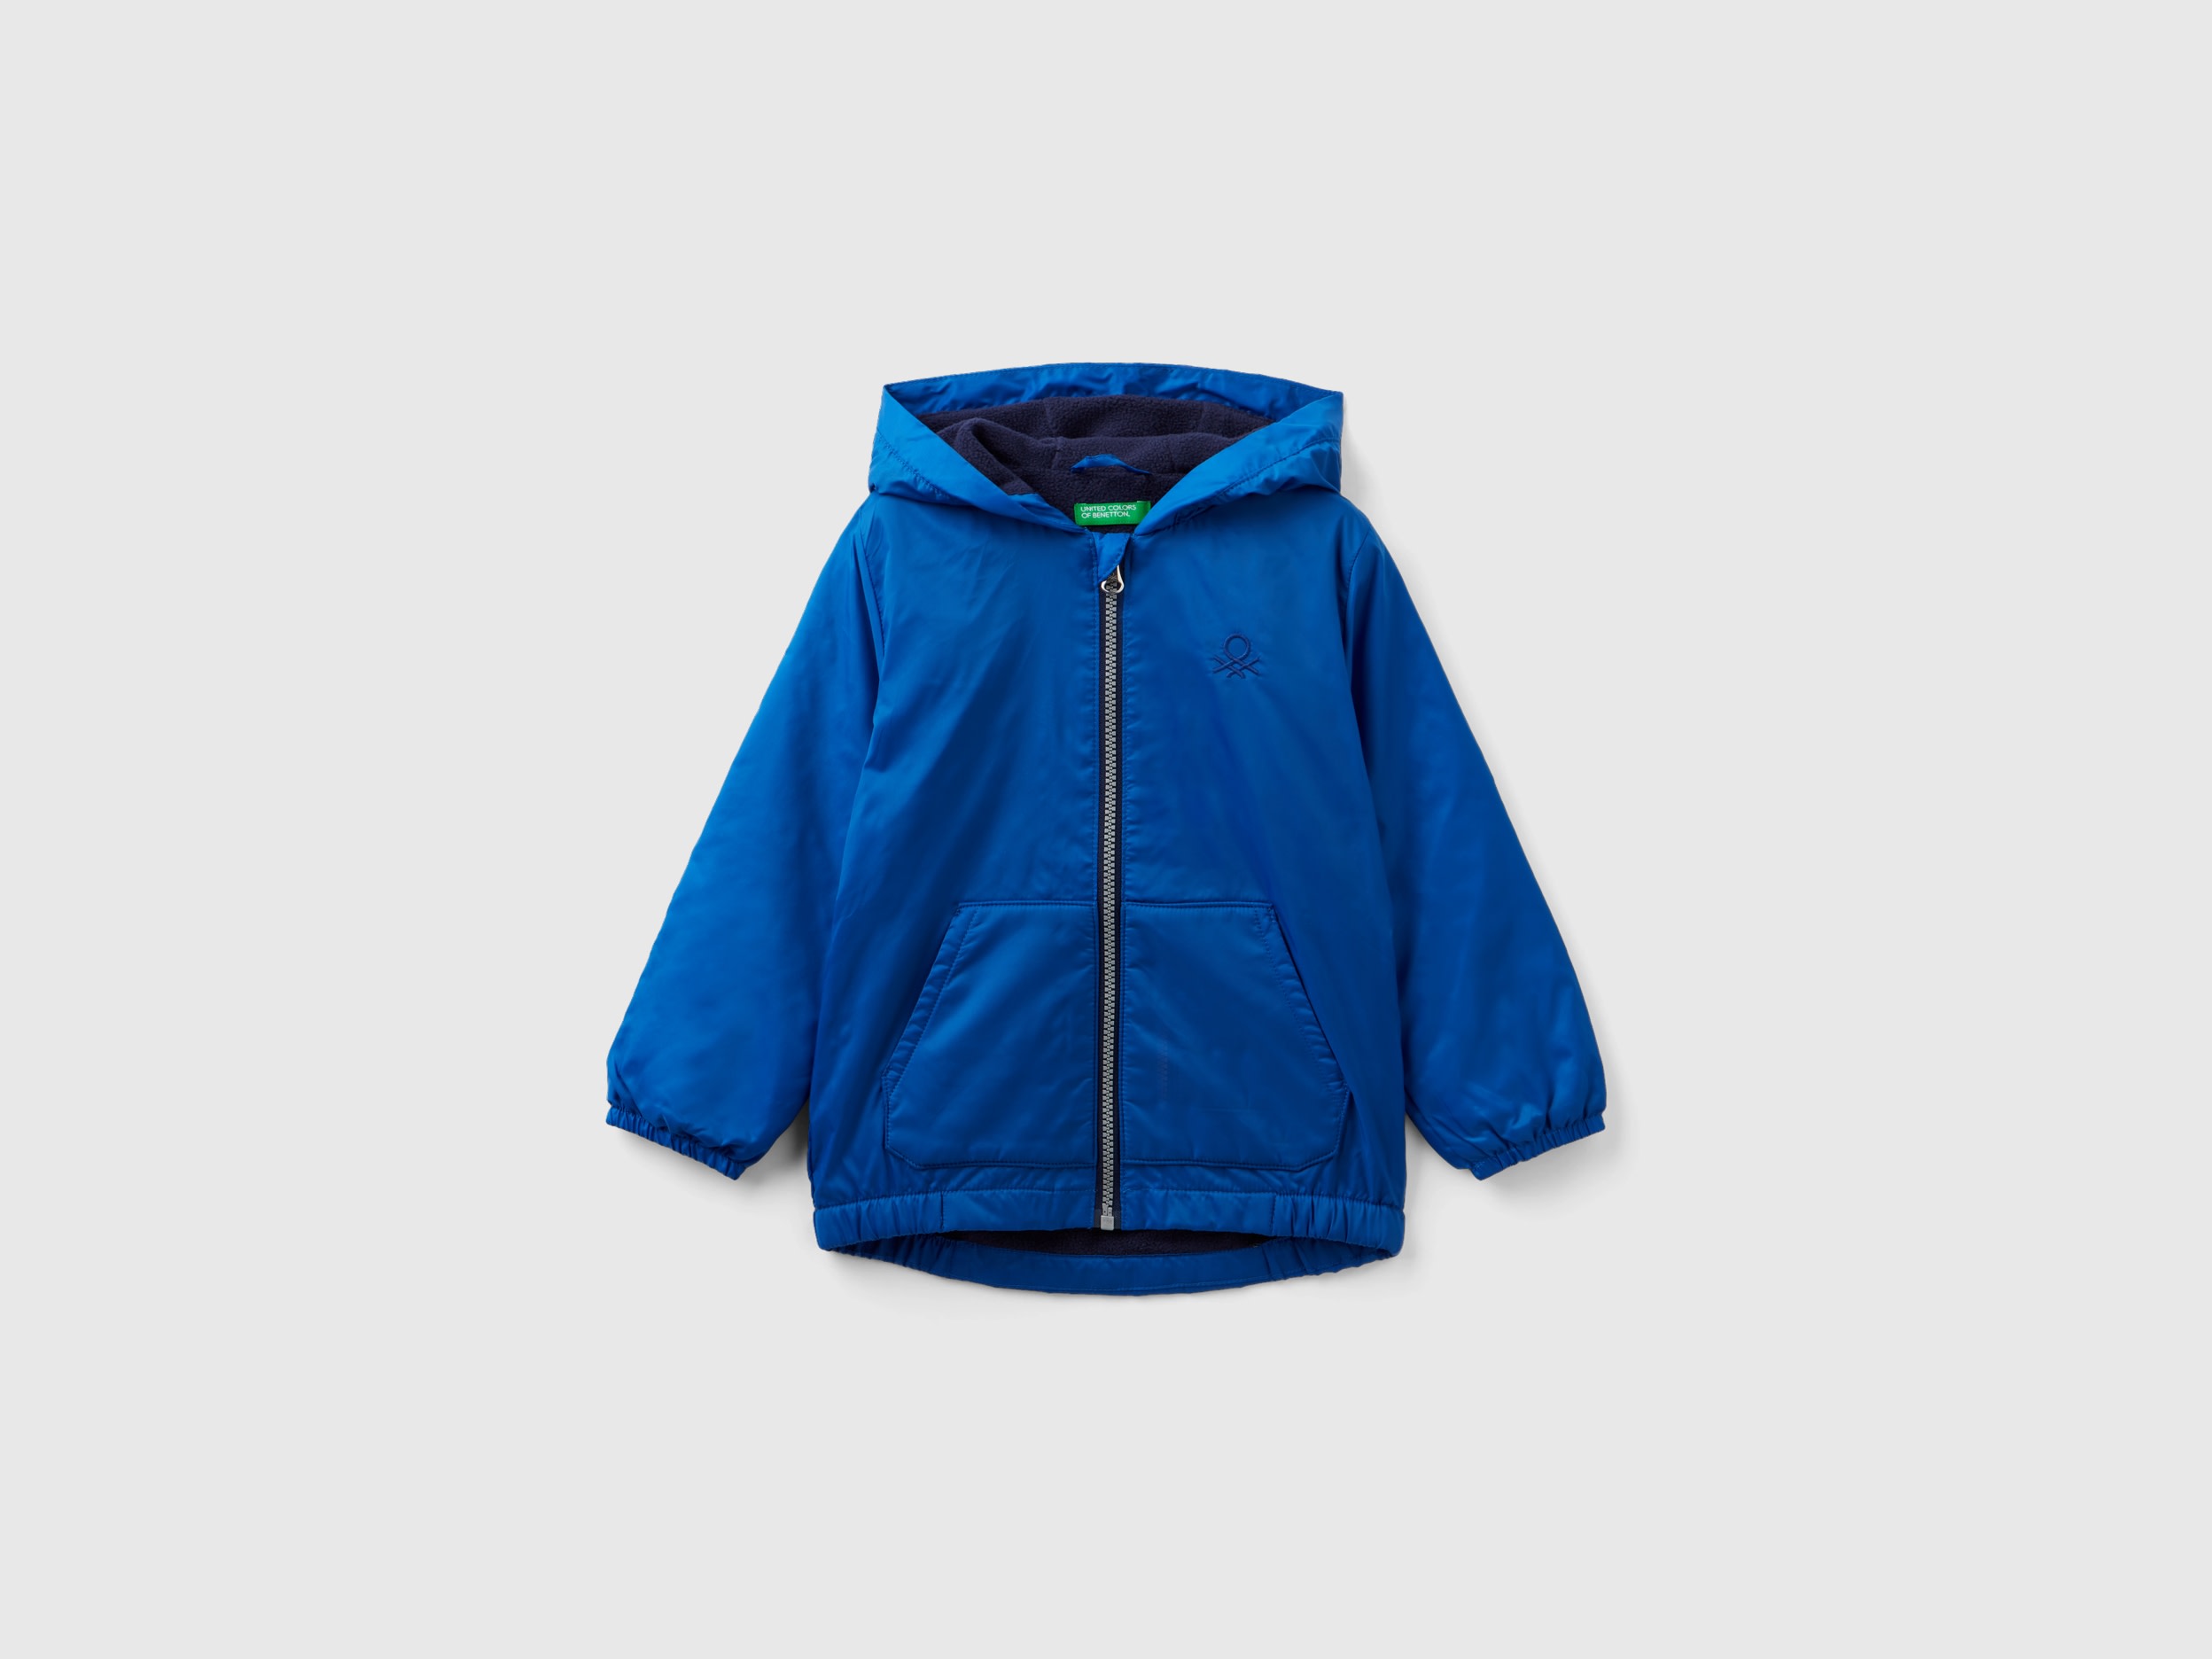 Benetton, Jacket With Oversized Hood, size 12-18, Bright Blue, Kids